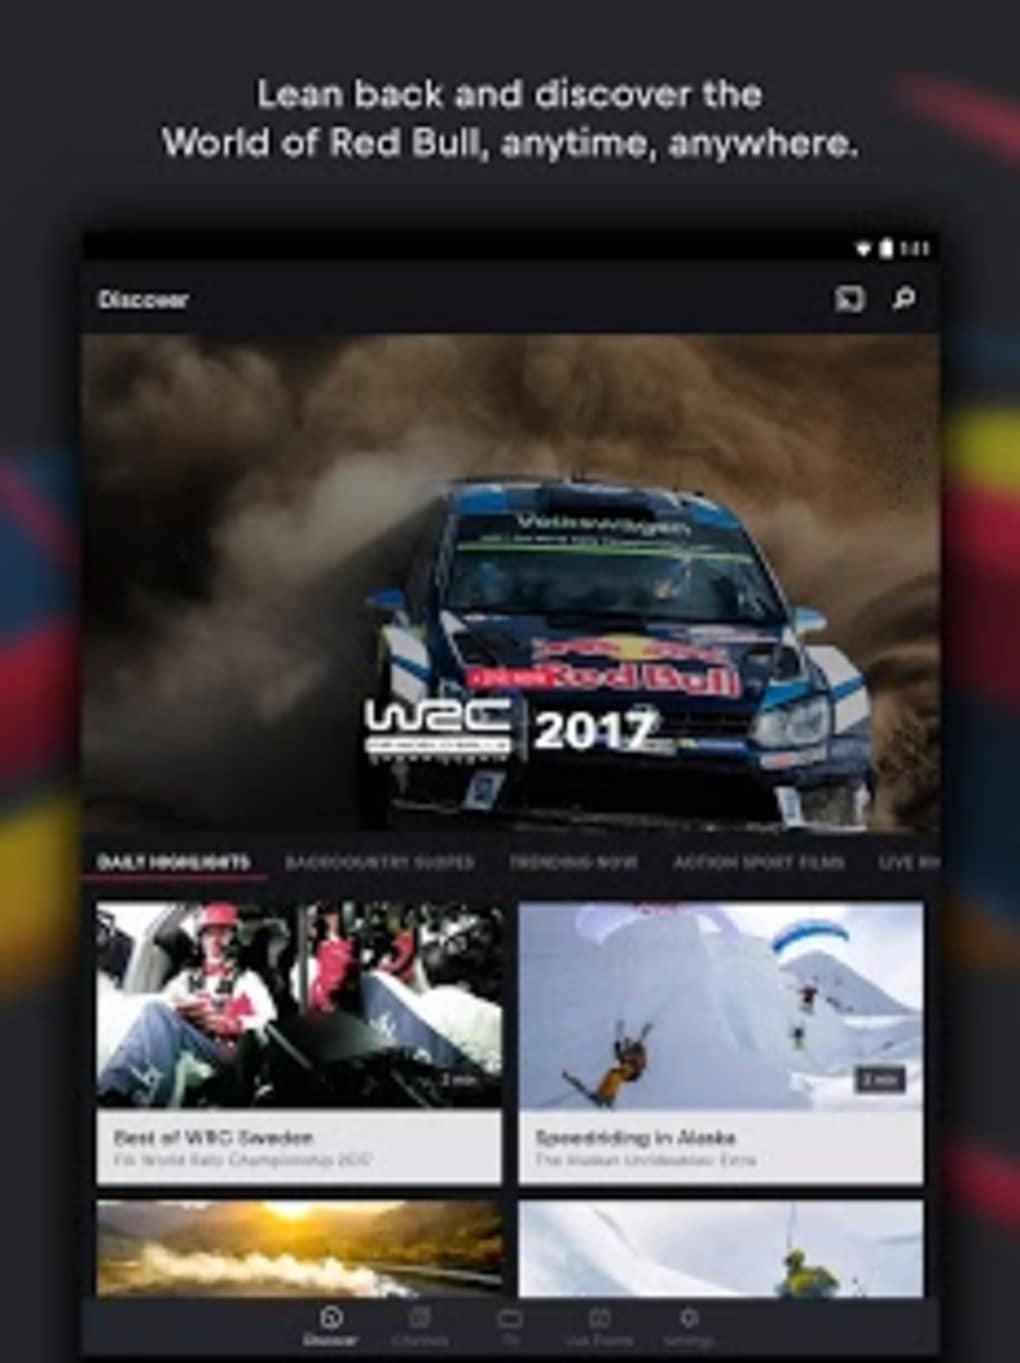 Red Bull Tv Apk Para Android Descargar - get free robux tips 2k19 apk app descarga gratis para android